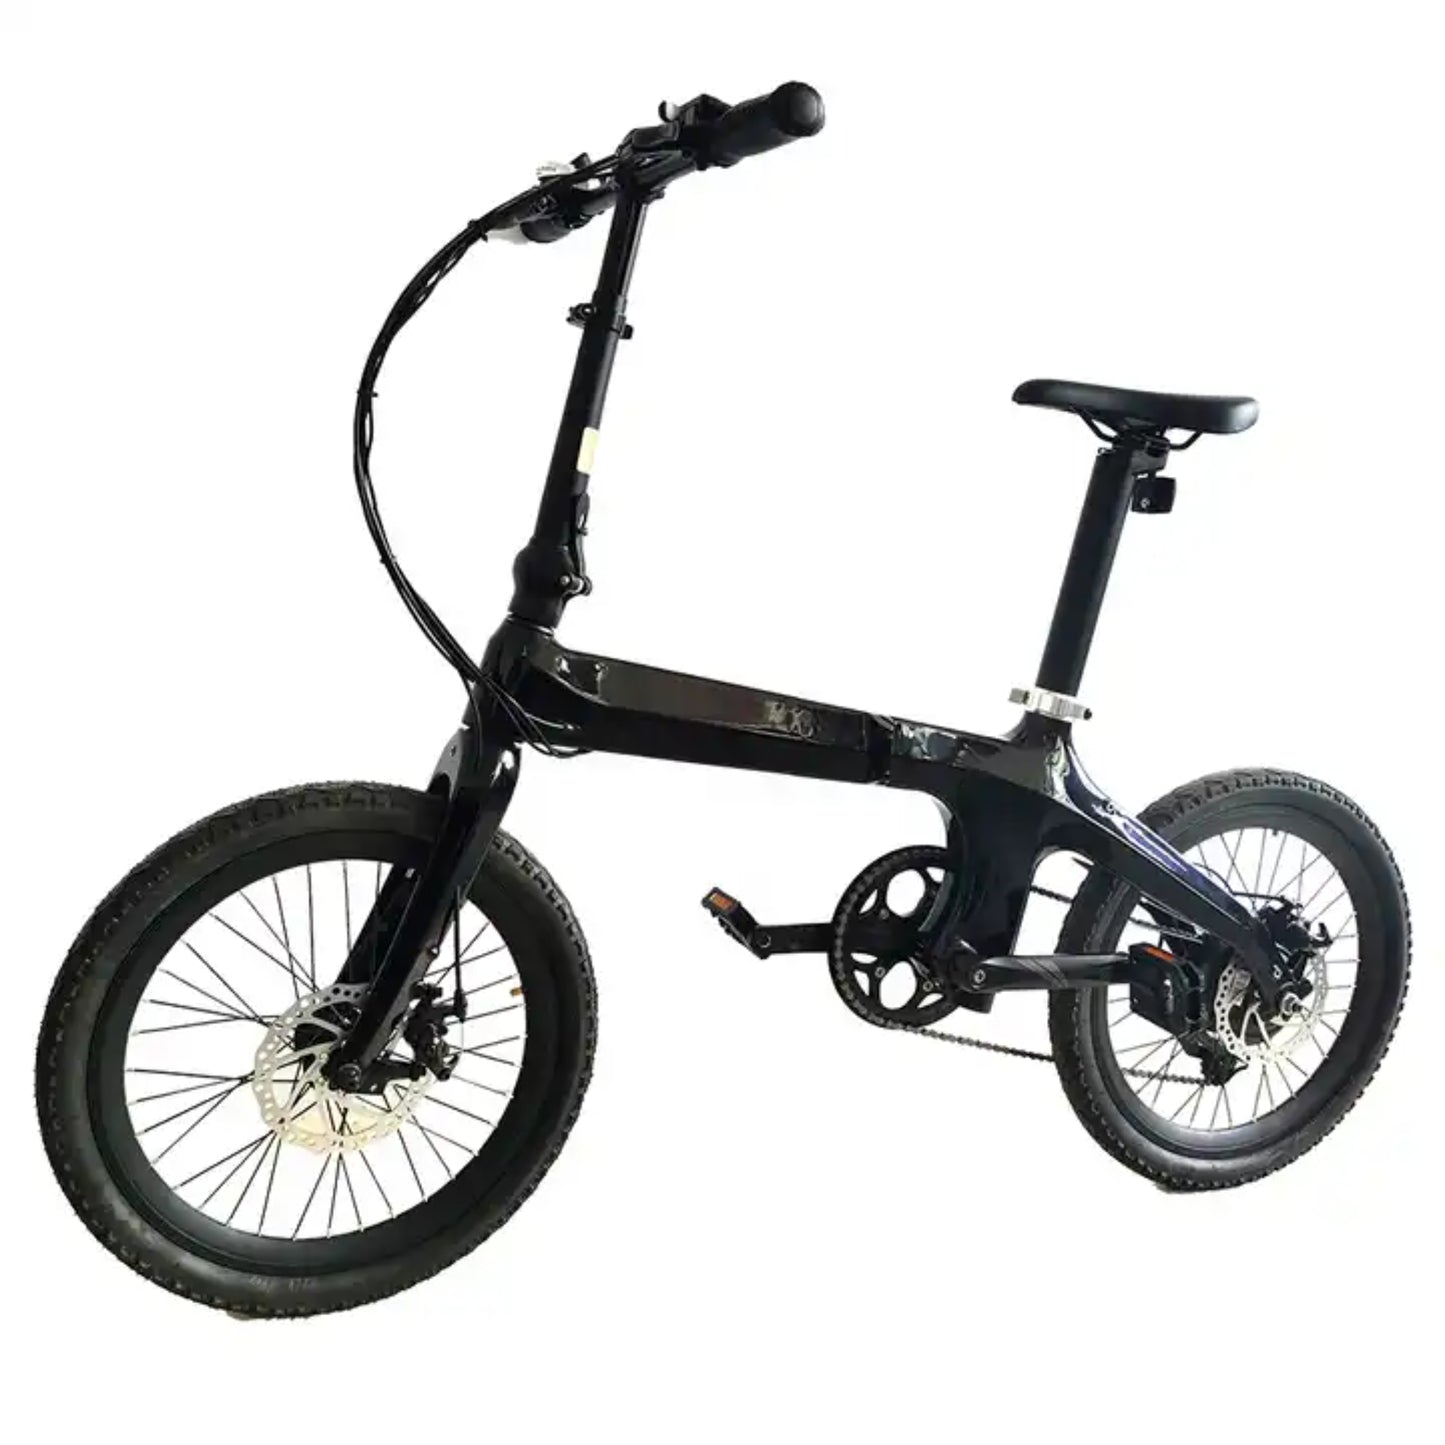 Morfuns Eole S, 20" Lightweight Carbon Fibre Folding Electric Road Bike